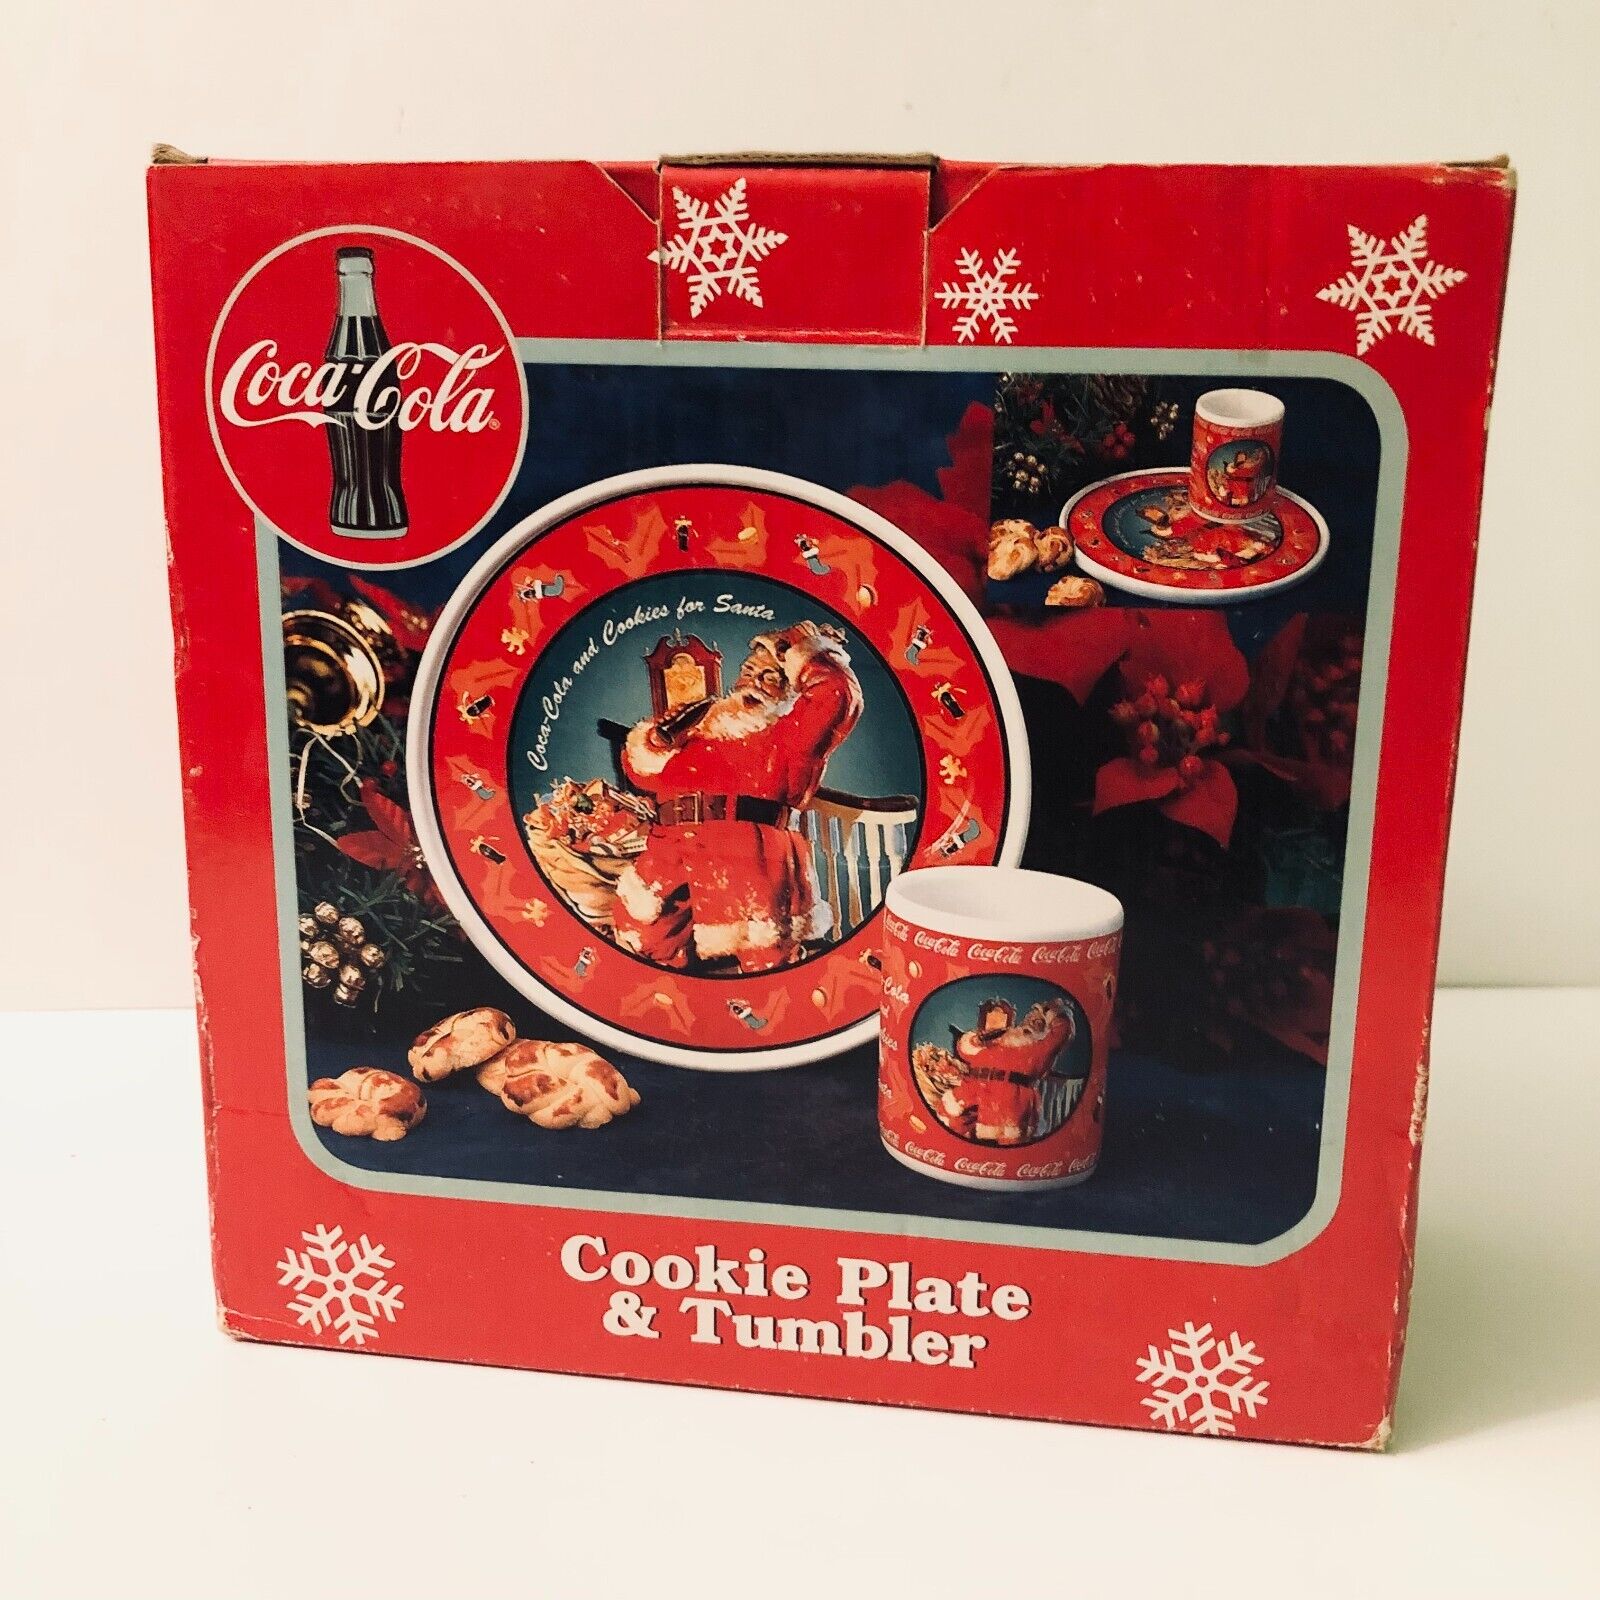 Vrg 1998 Enesco Coco Cola Santa Cookie Plate and Tumbler Christmas